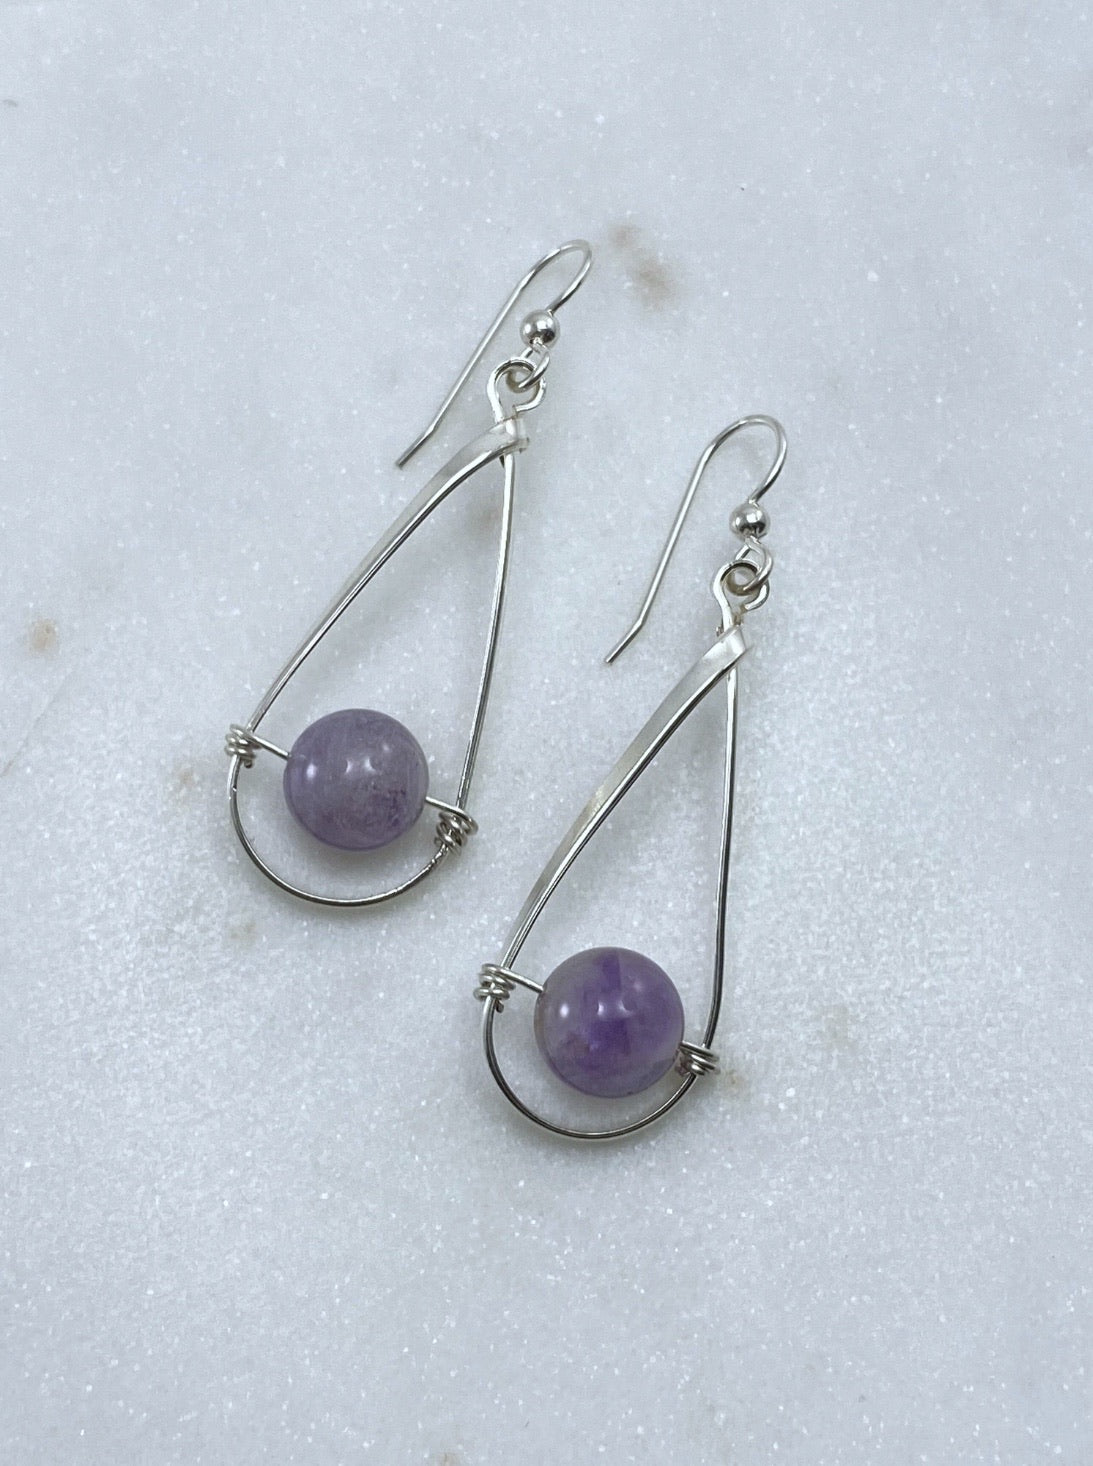 Sterling silver teardrop earrings with amethyst gemstone